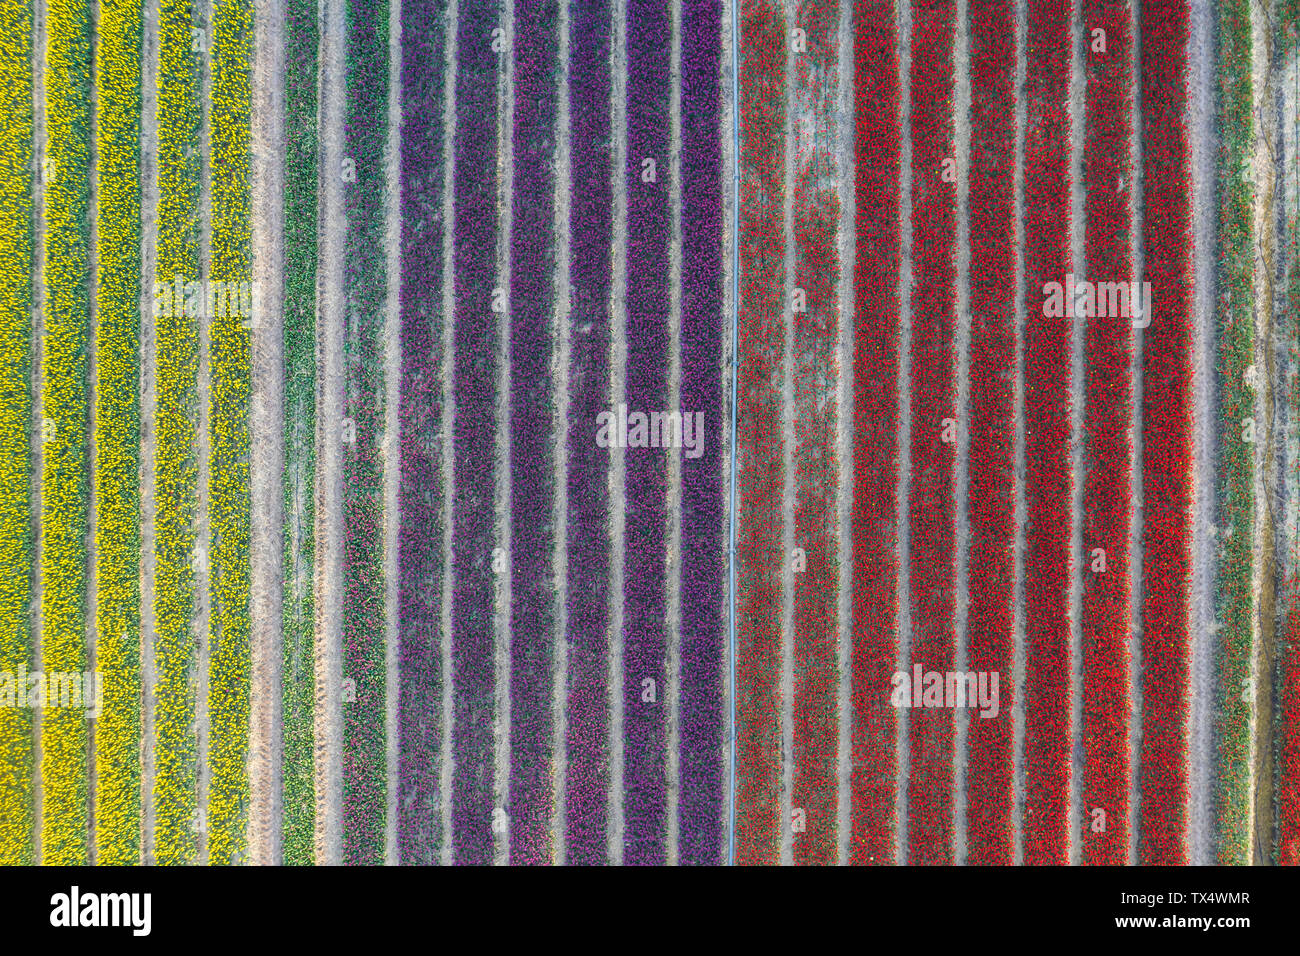 Germany, Saxony-Anhalt, aerial view of tulip fields Stock Photo